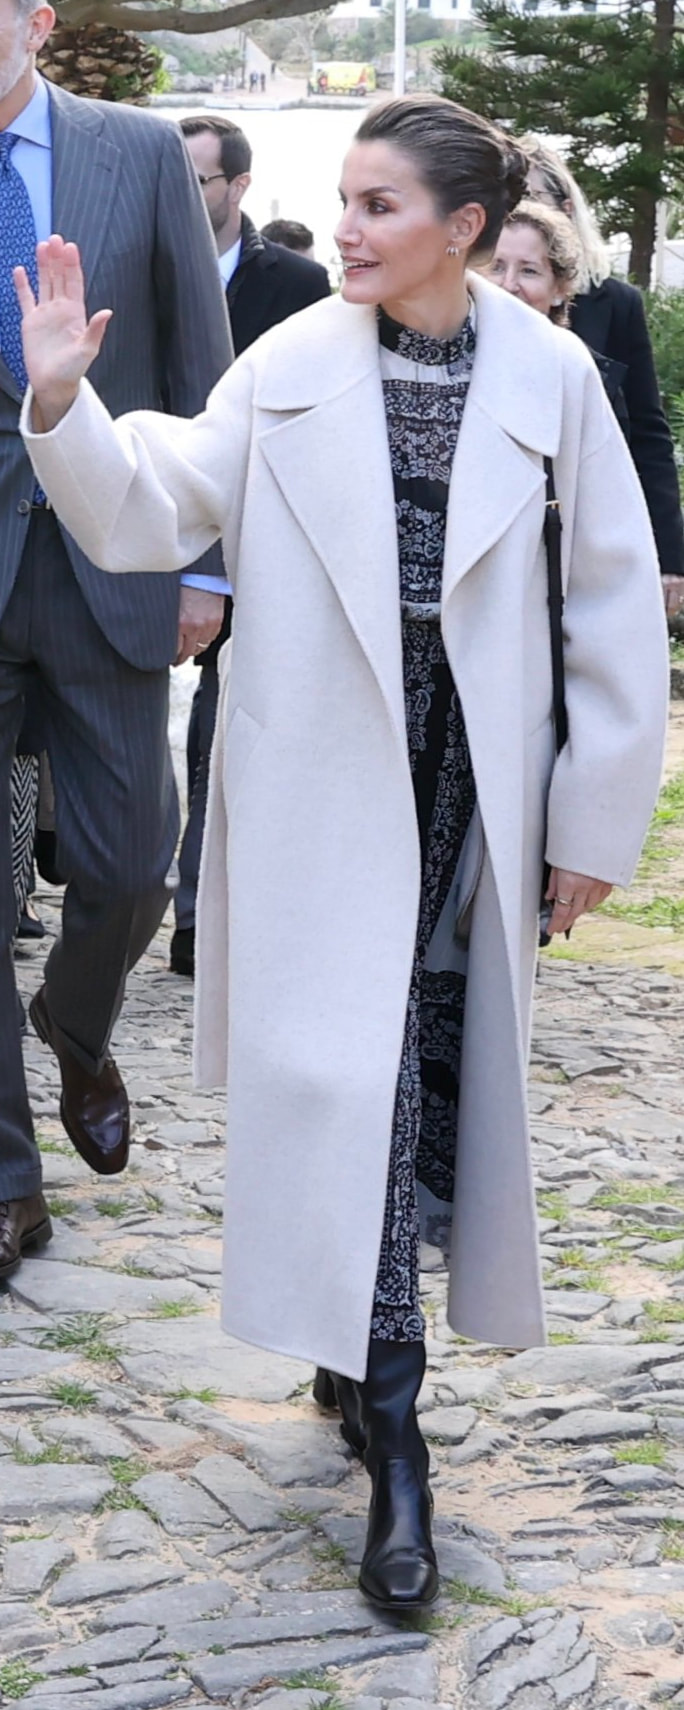 & Other Stories Oversized Wool Coat in Oatmeal​ as seen on Queen Letizia.